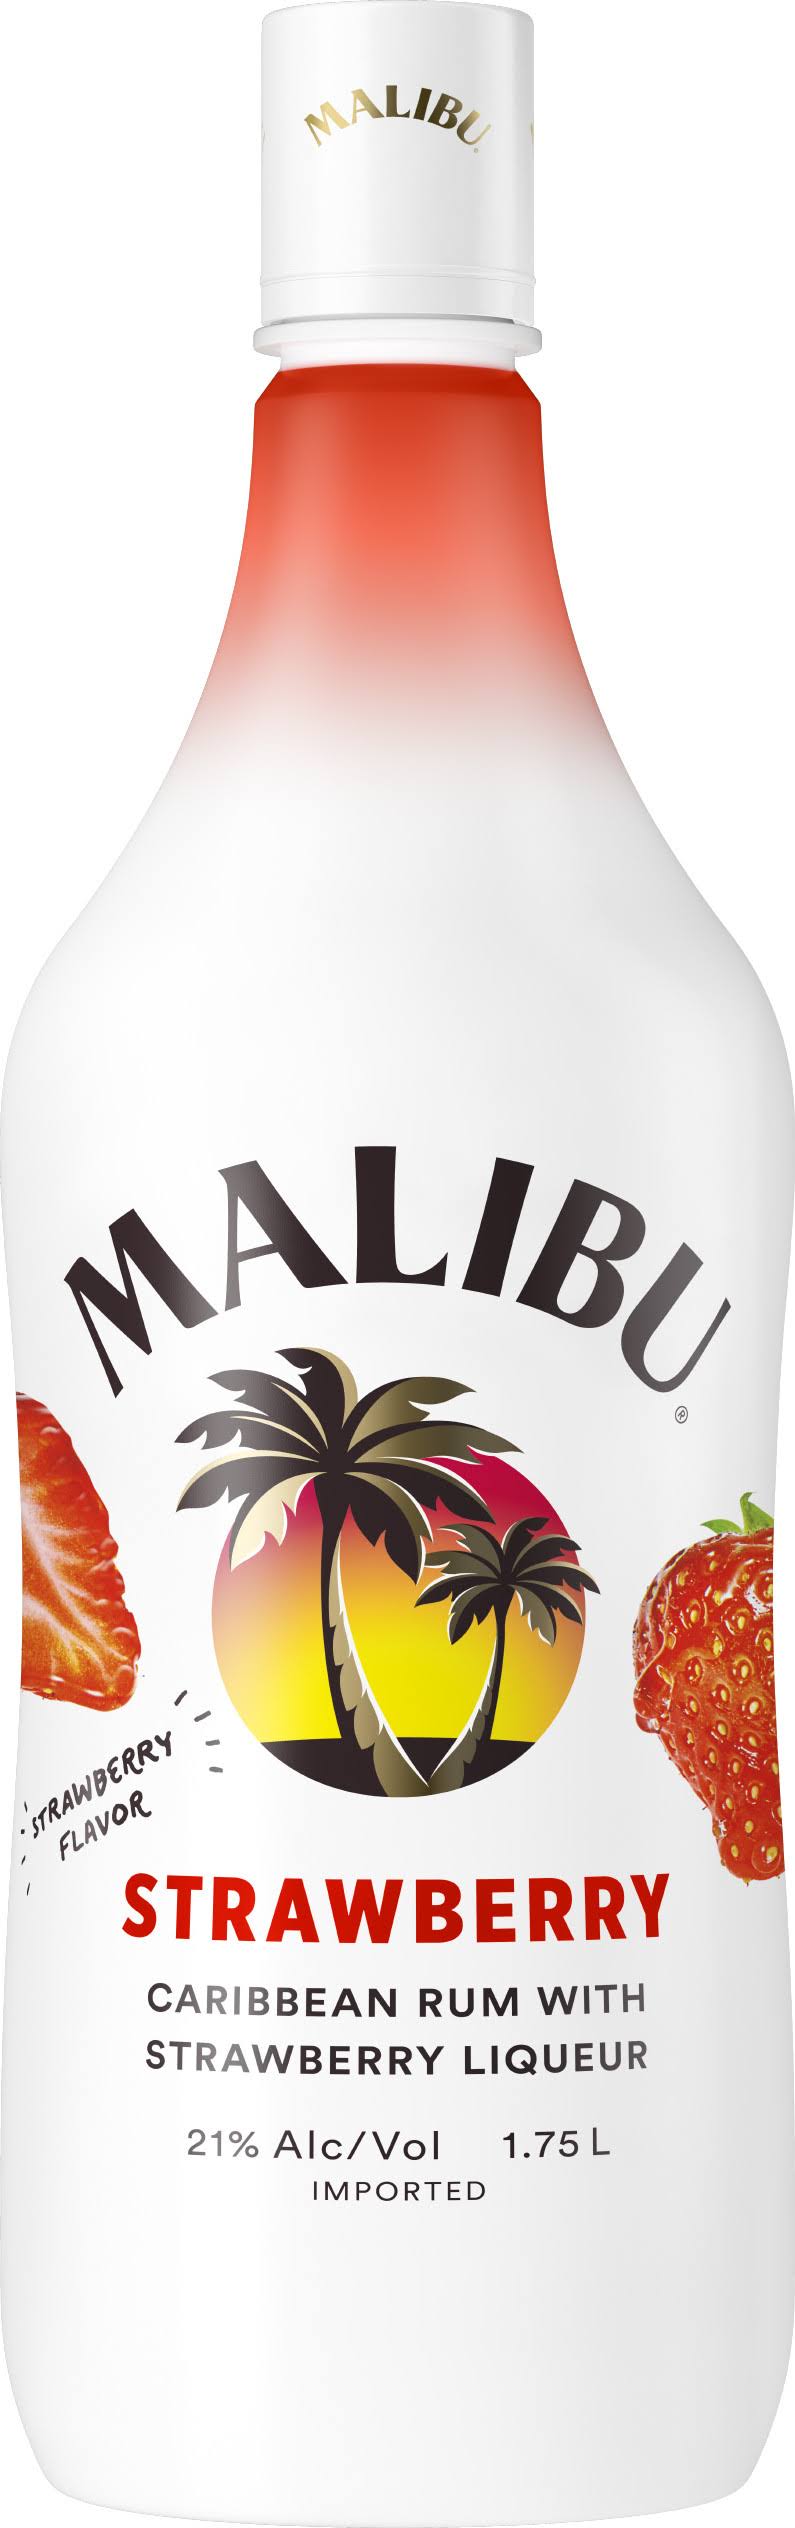 Malibu Caribbean Rum, Strawberry Flavor - 1.75 l